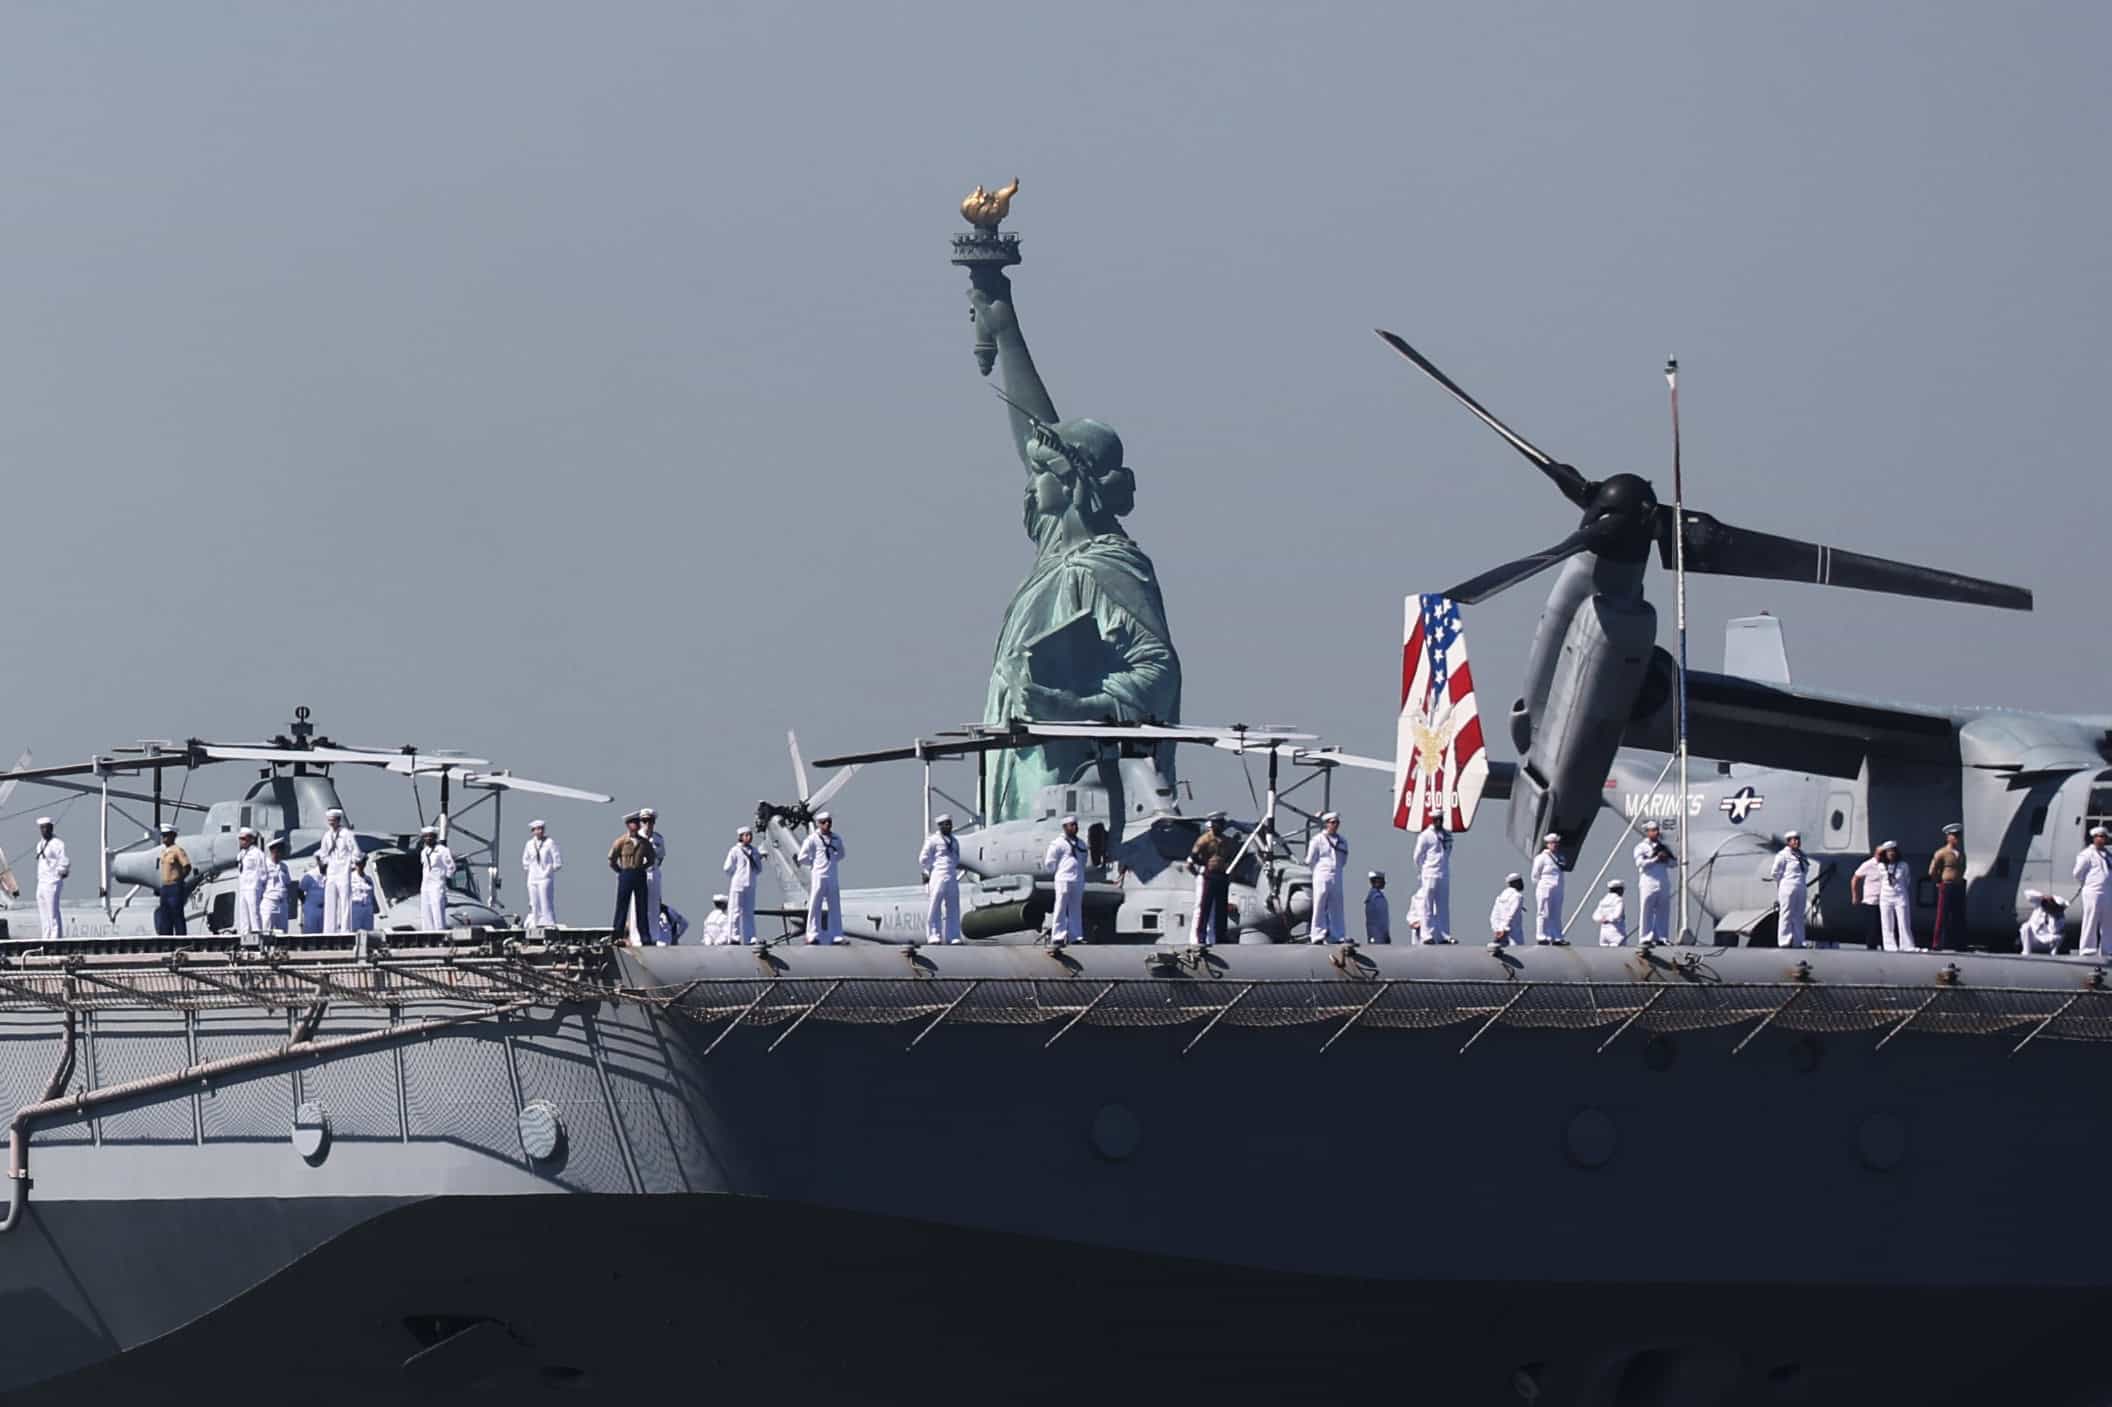 Annual Parade Of Ships Kicks Off New York's Fleet Week